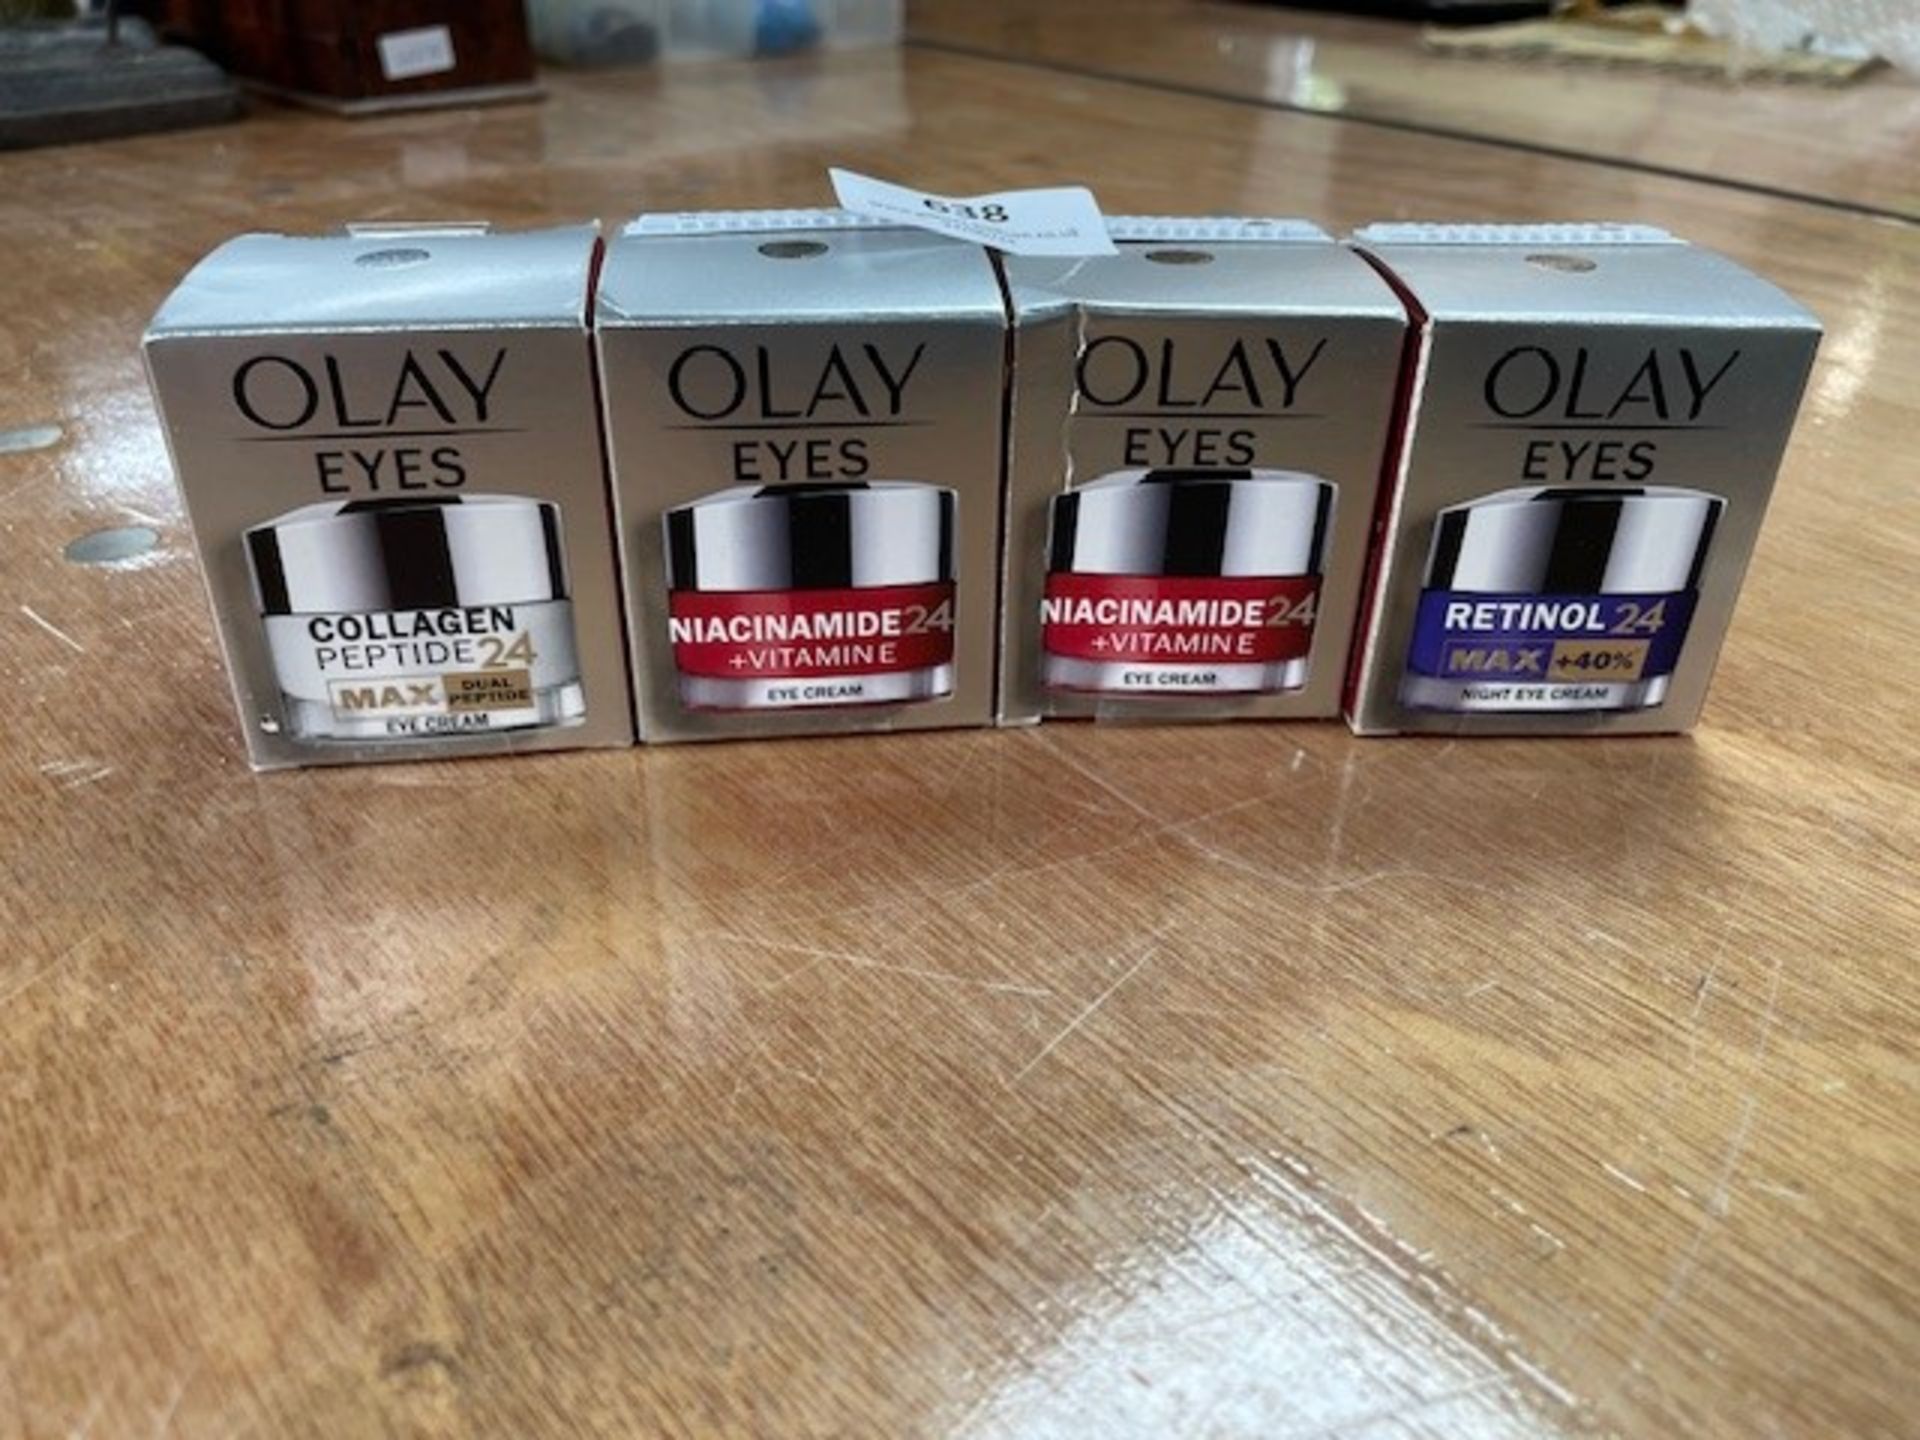 Four Olay 15ml Eye Creams (1x Collagen Eye Cream, 2x Niacinamide + Vitamin E, 1x Retinol Night Eye